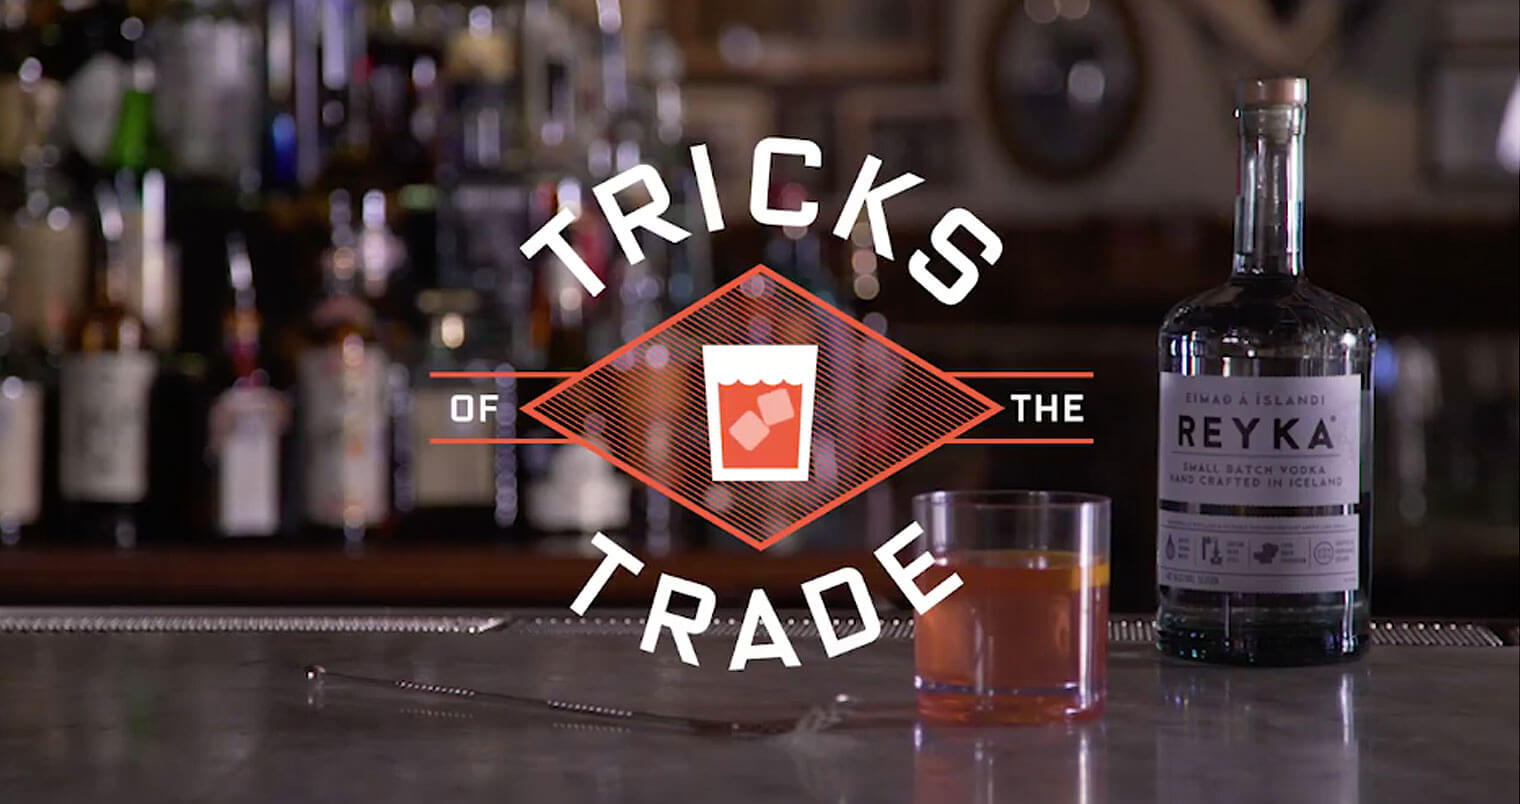 Reyka Vodka’s Tricks of the Trade Video Series Reaches 1 Million Views, featured